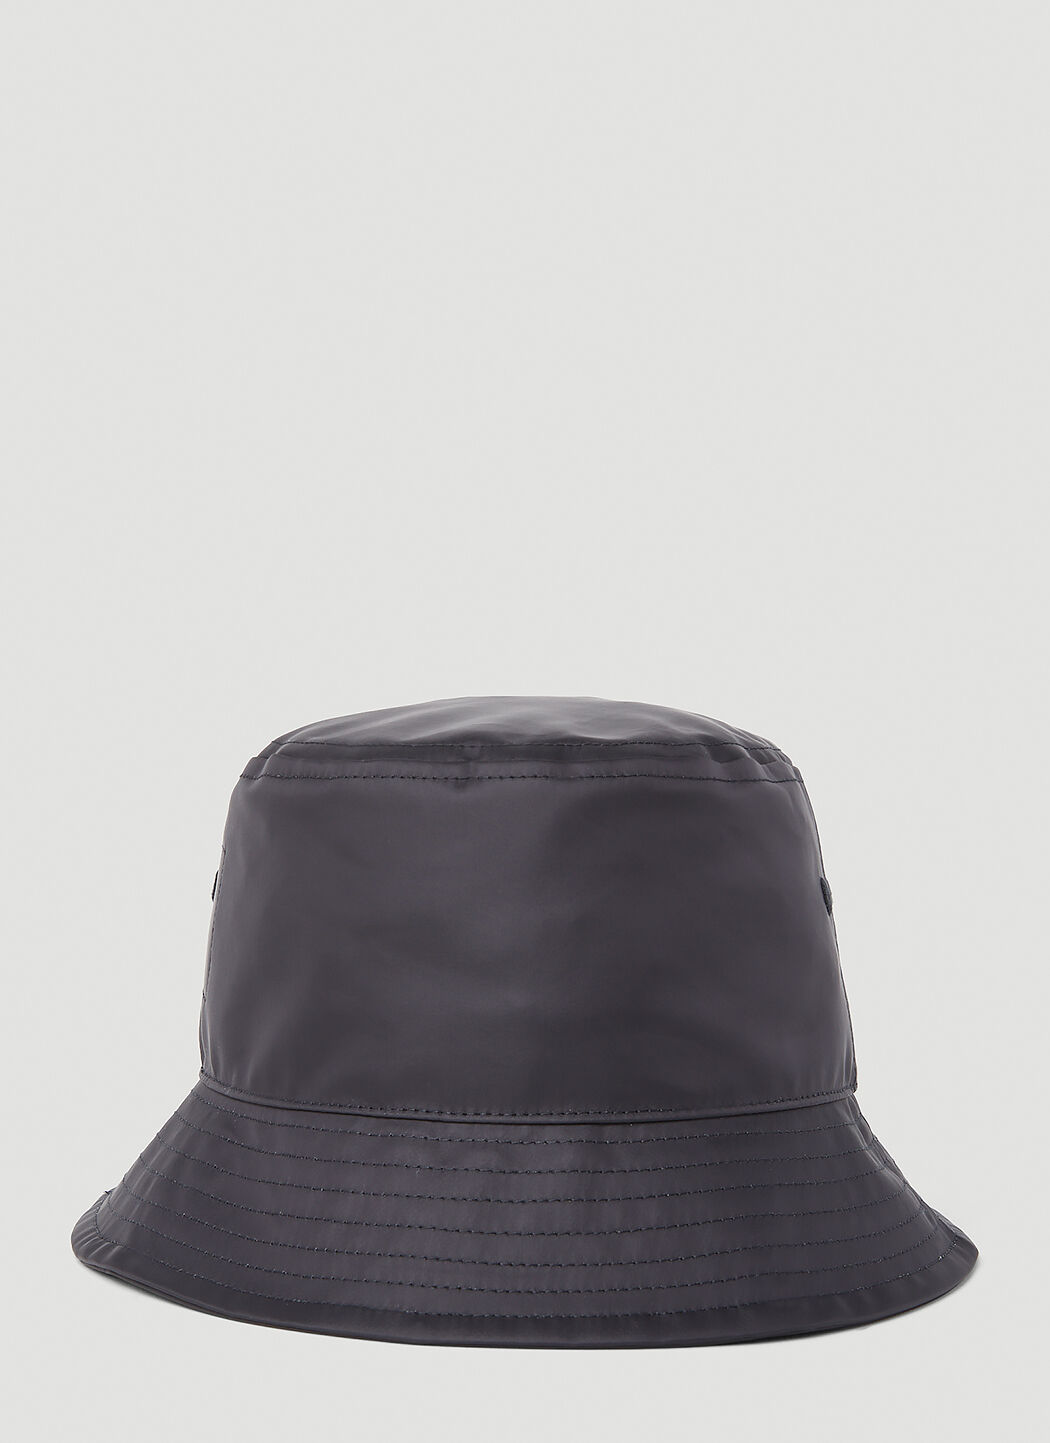 Rick Owens x Champion Men's Gilligan Hat in Black | LN-CC®